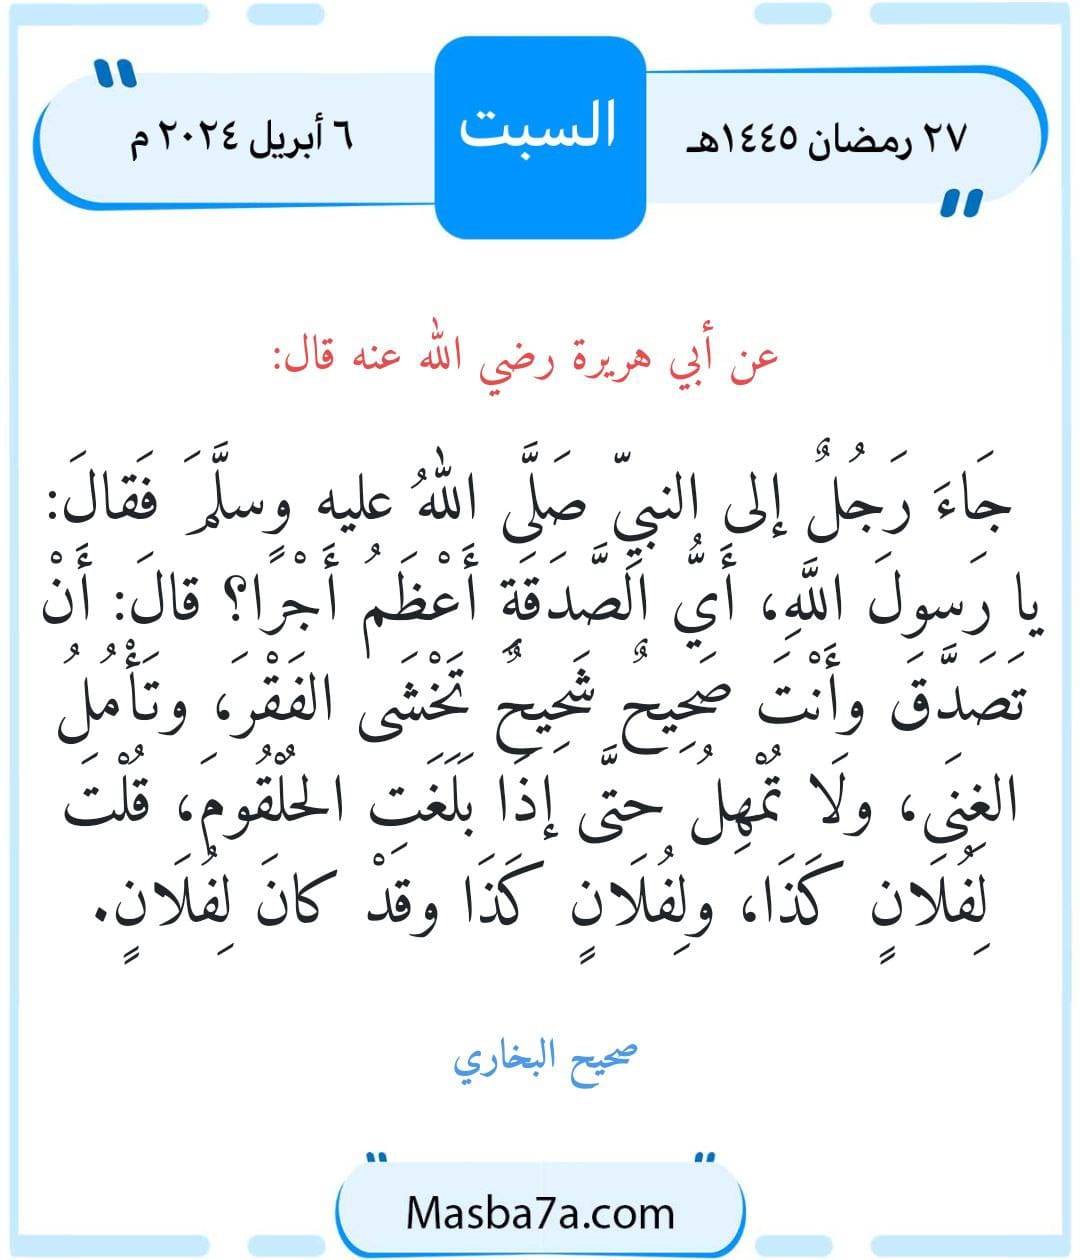 islam prayer text